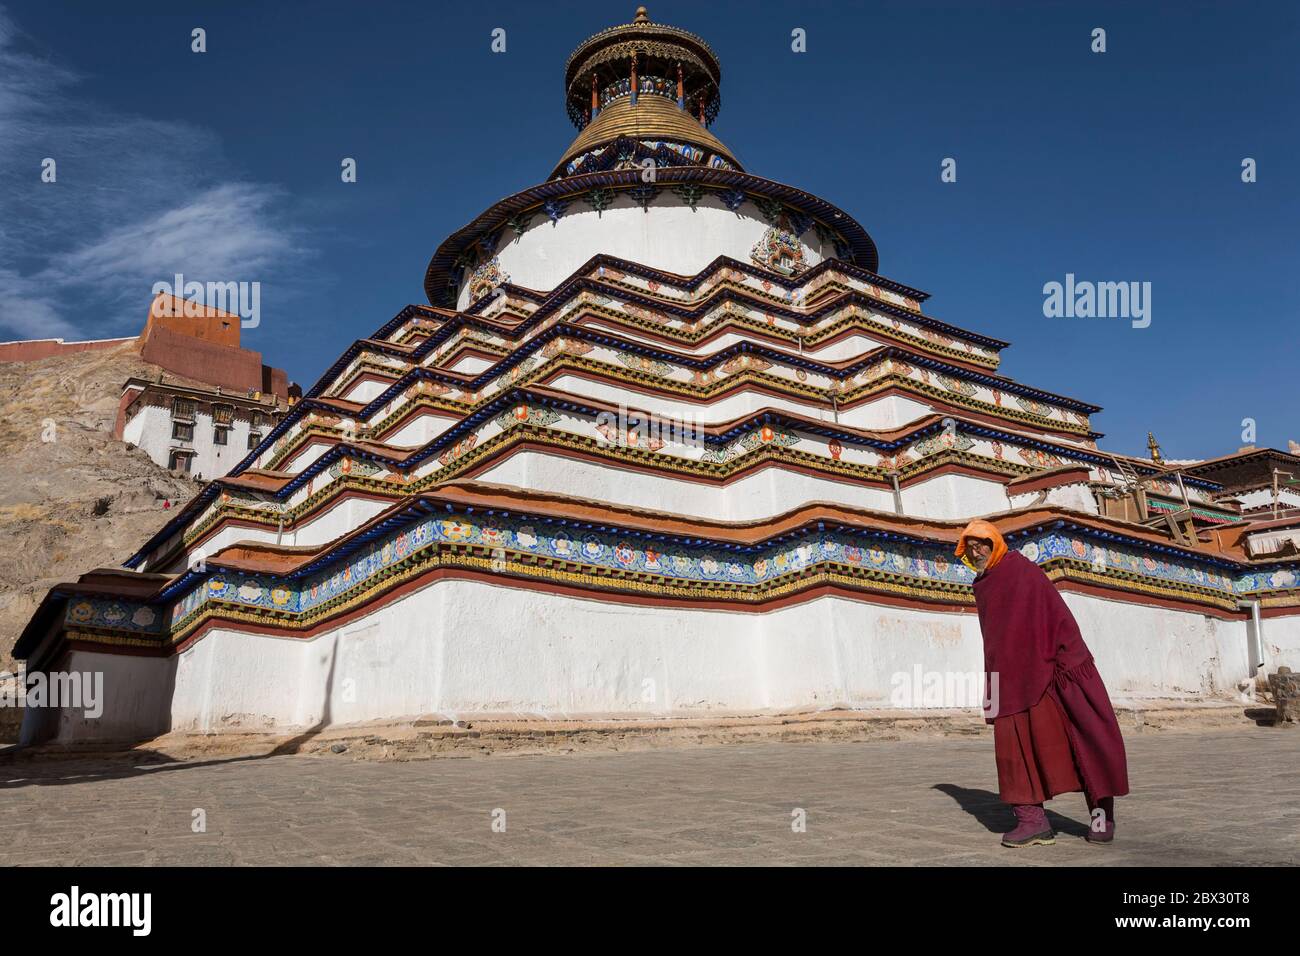 China, Tibet Autonomous Region, Gyantse, Pelkor Chode monastery, monk passing in front of the Kumbum, large chorten with multiple ornate chapels, altitude 4000 m Stock Photo